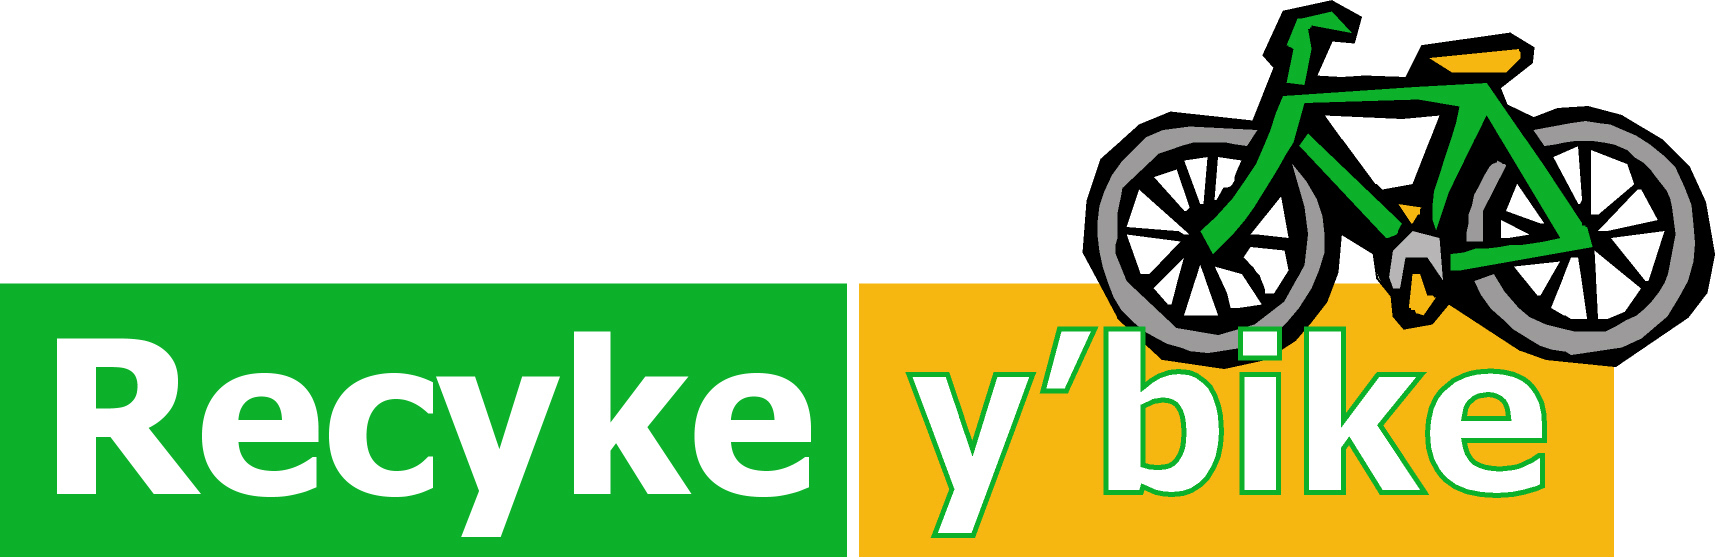 Recyke y'bike logo